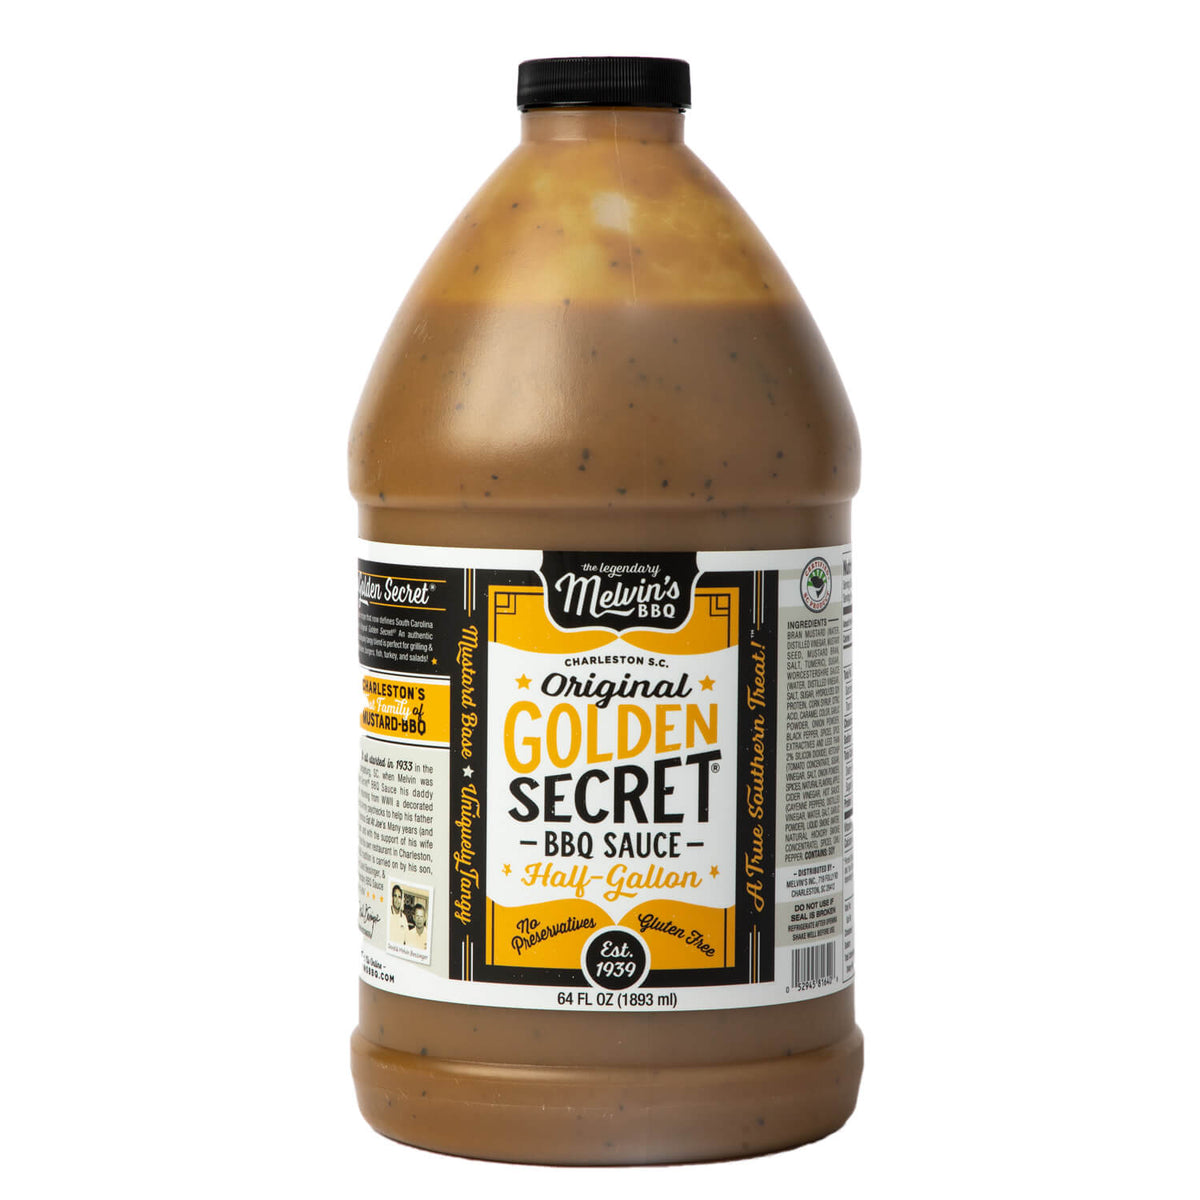 melvin's original golden secret sauce - 1/2 gallon